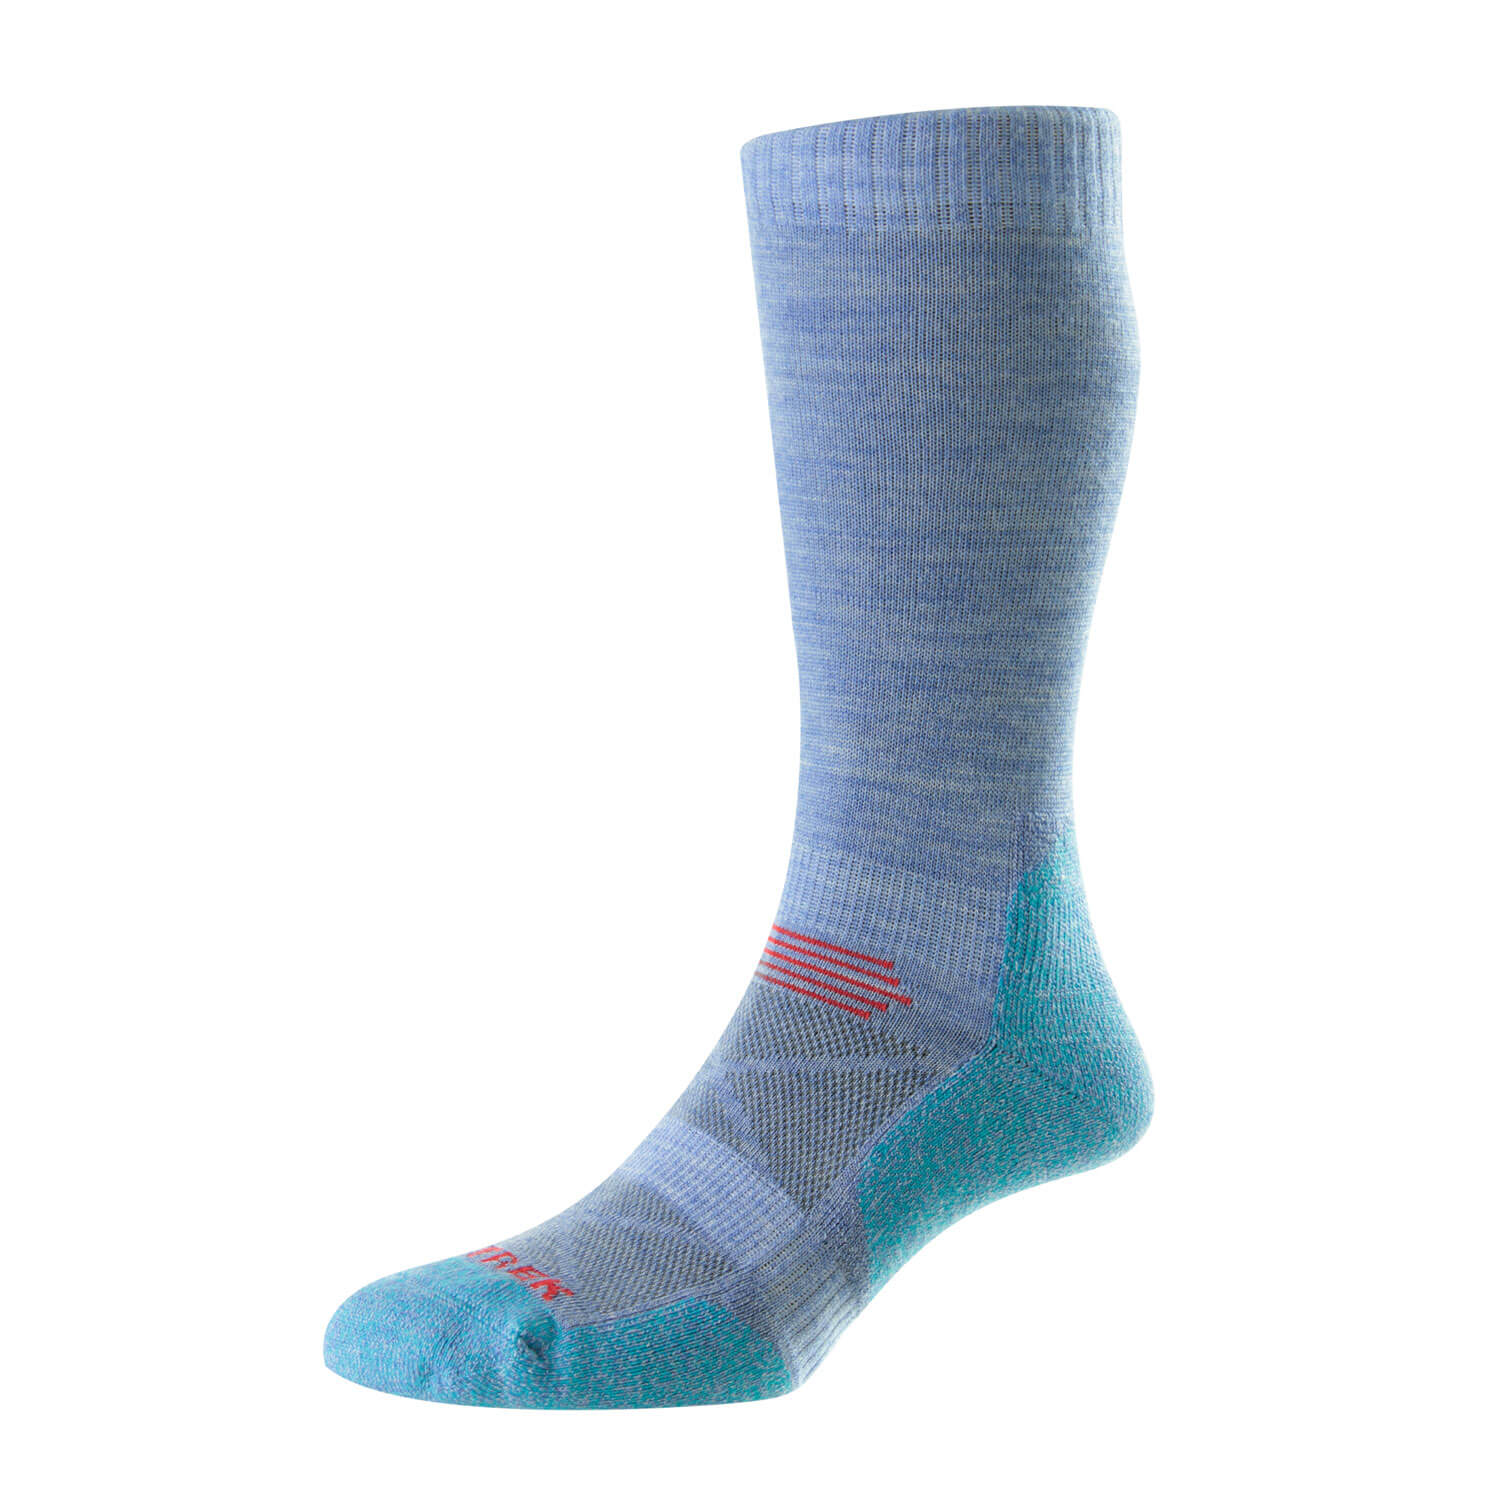 Protrek Adventure Trek Socks One Size - Denim 1 Shaws Department Stores